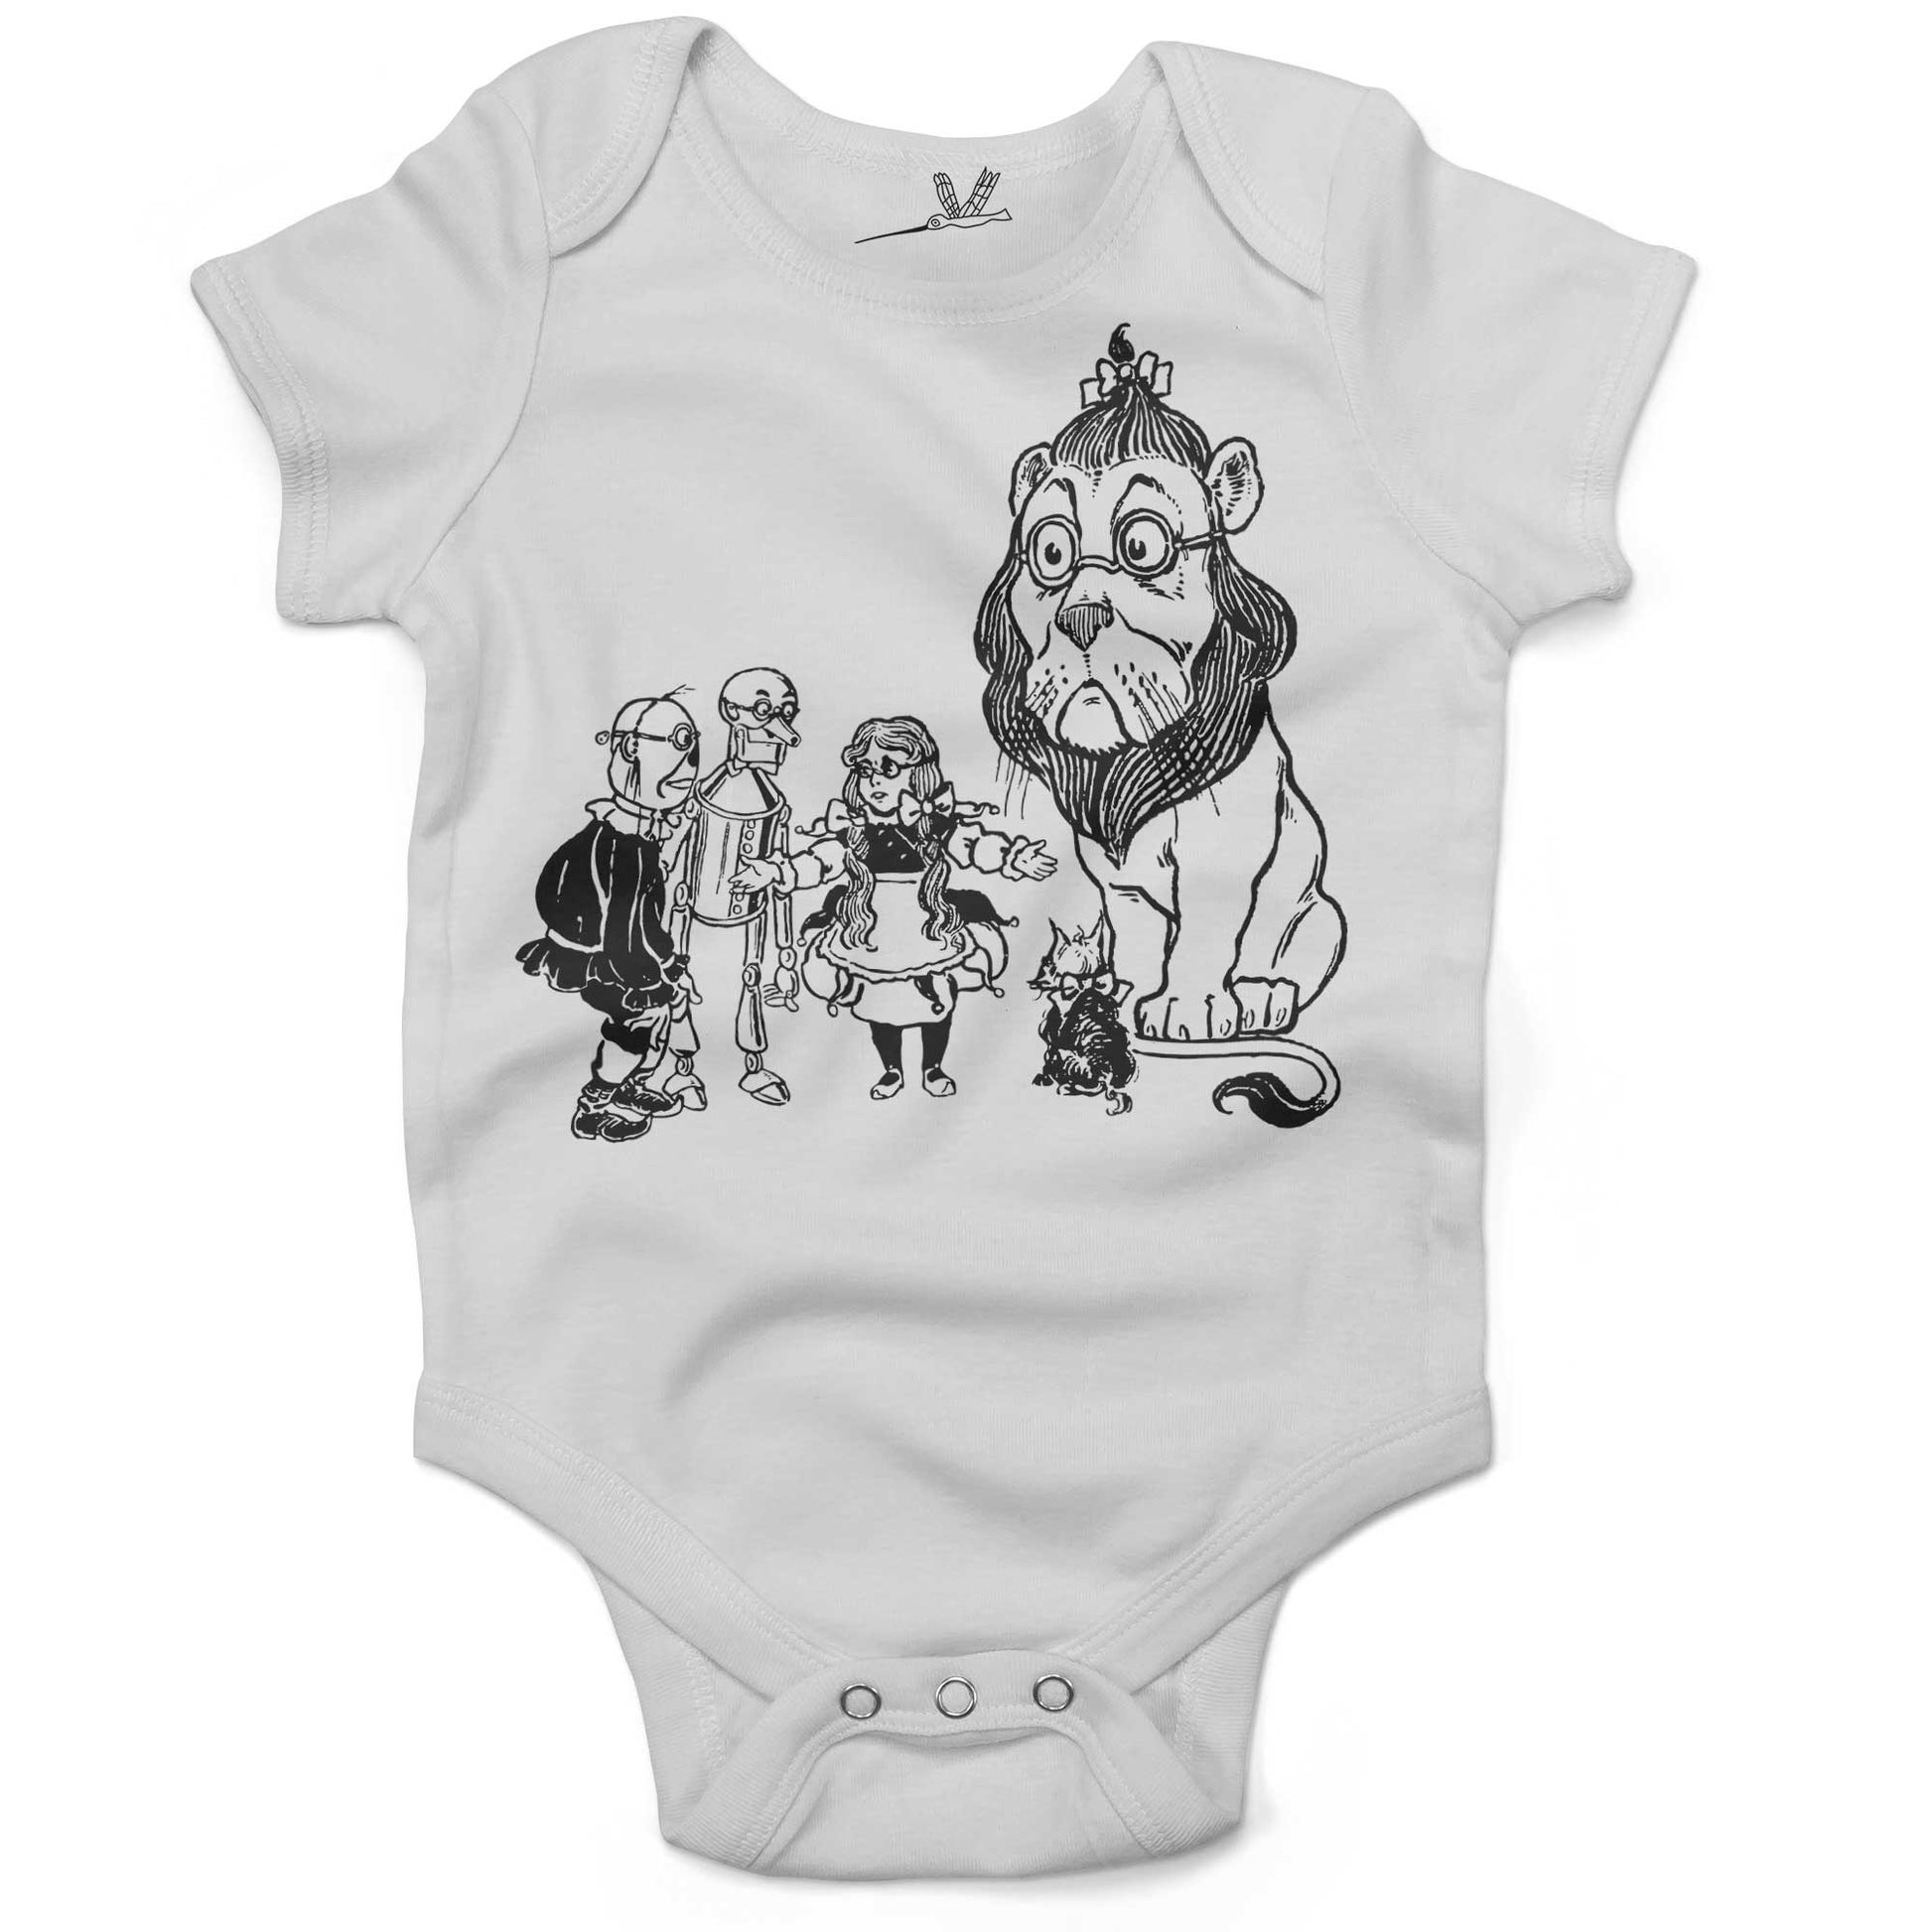 Wizard Of Oz Infant Bodysuit-White-3-6 months